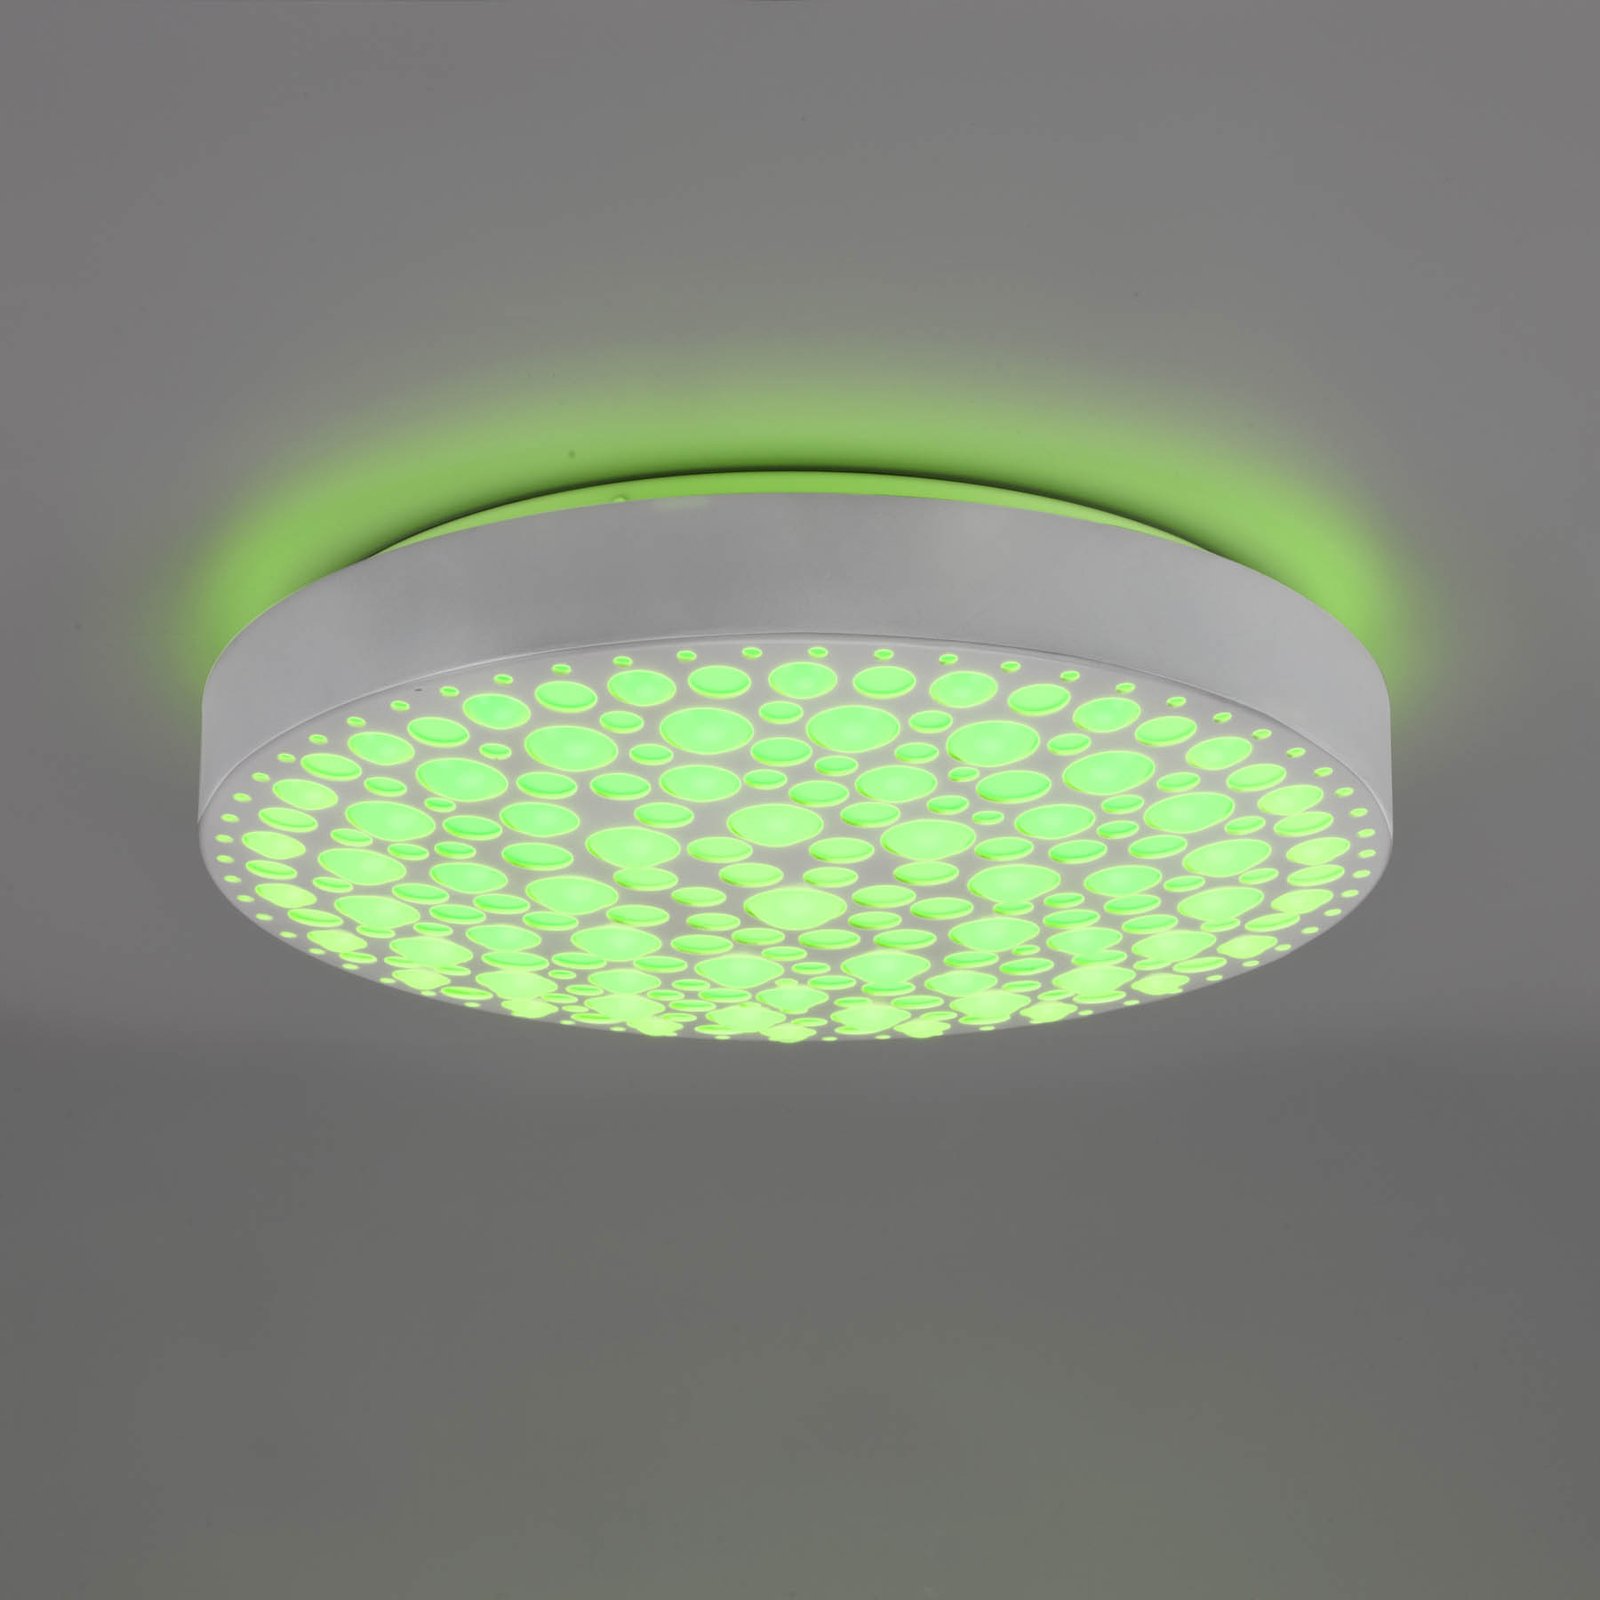 Chizu LED ceiling light Ø40.5cm dimmable RGB white